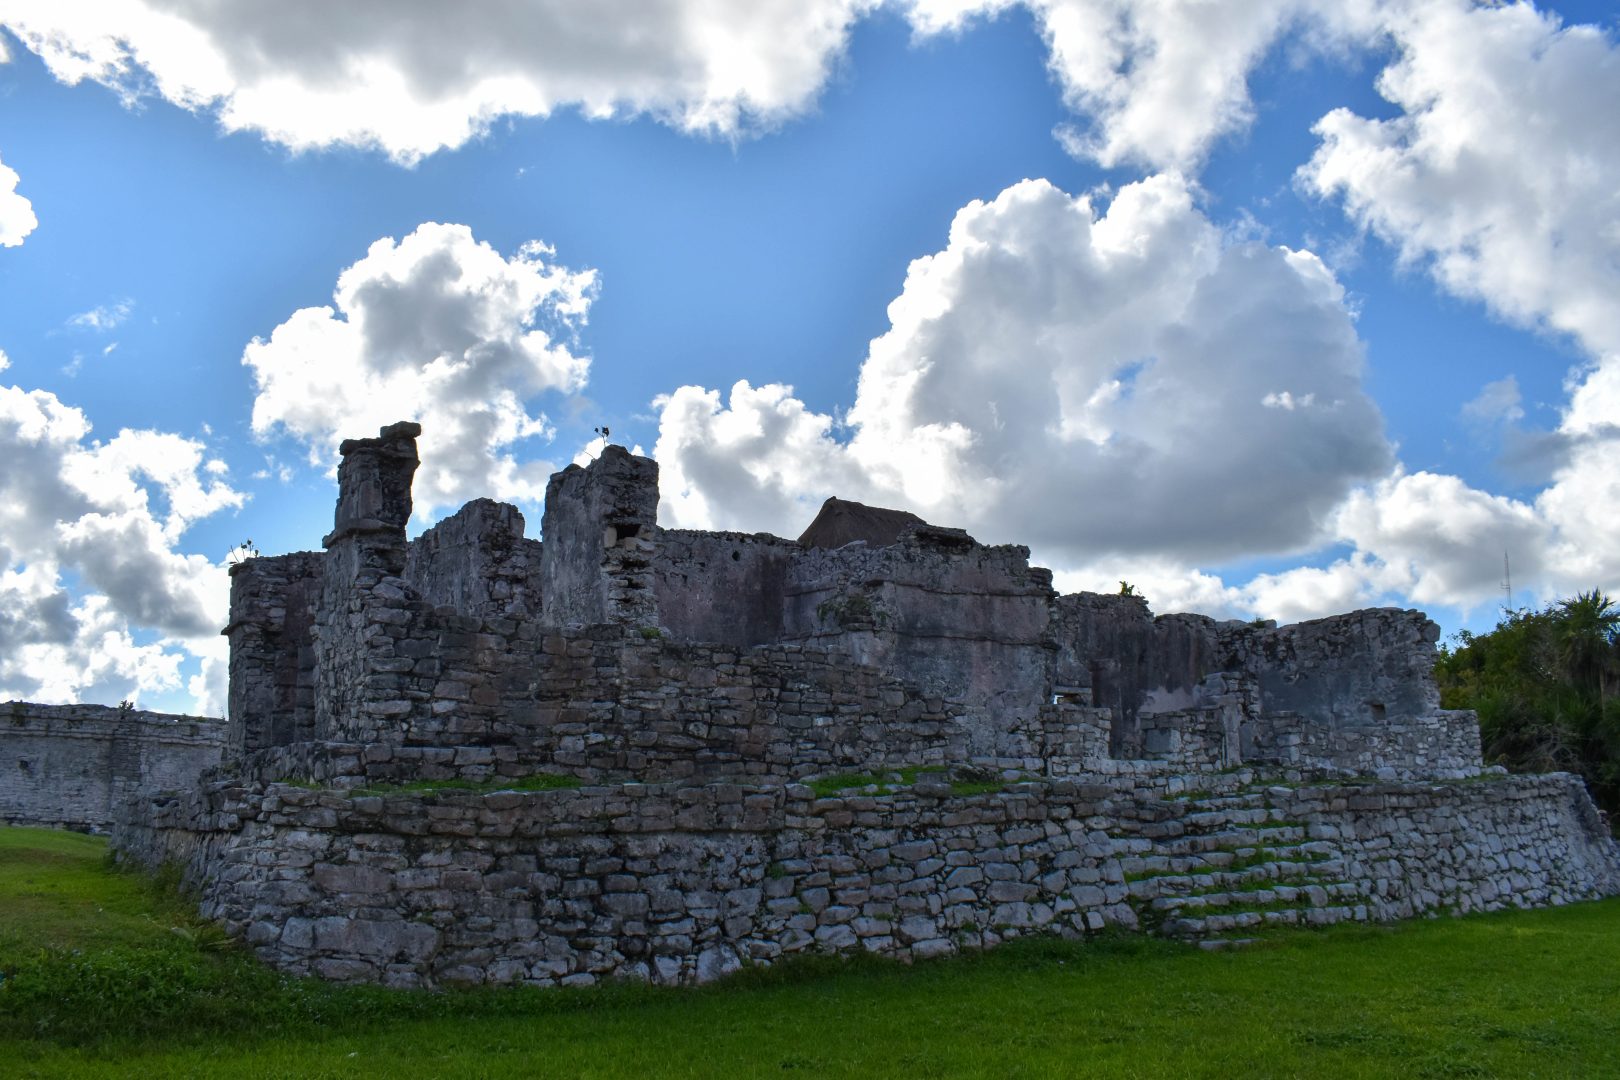 Zona Arqueológica de Tulum, Carretera Federal, Cancun - Chetumal Km 230, Tulum, Q.R.